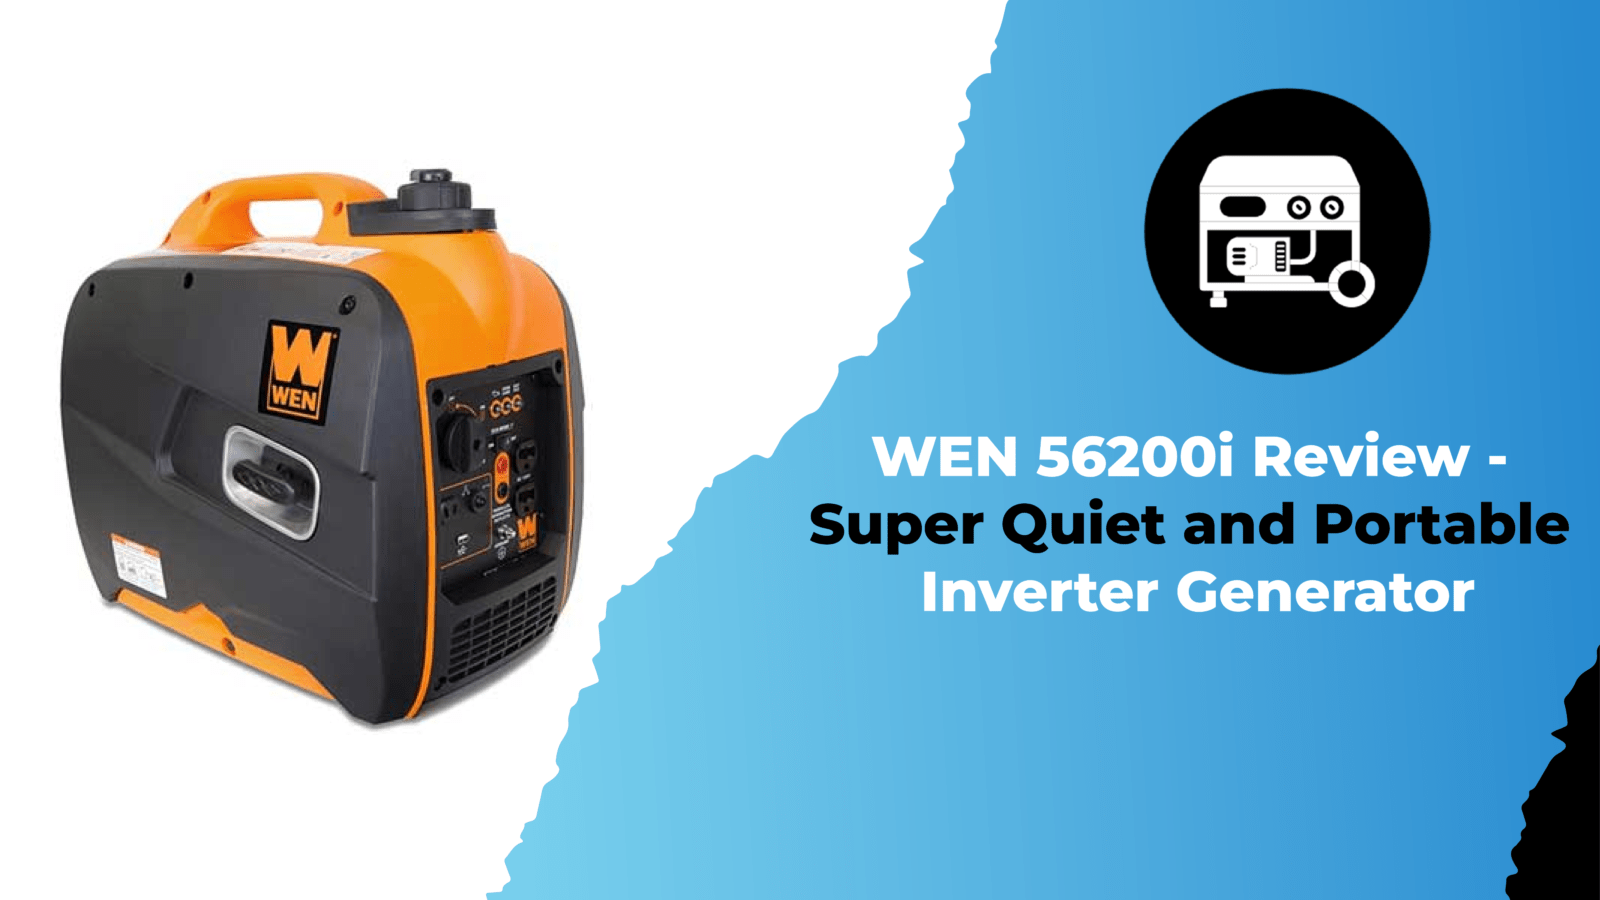 WEN 56200i Review - Super Quiet and Portable Inverter Generator